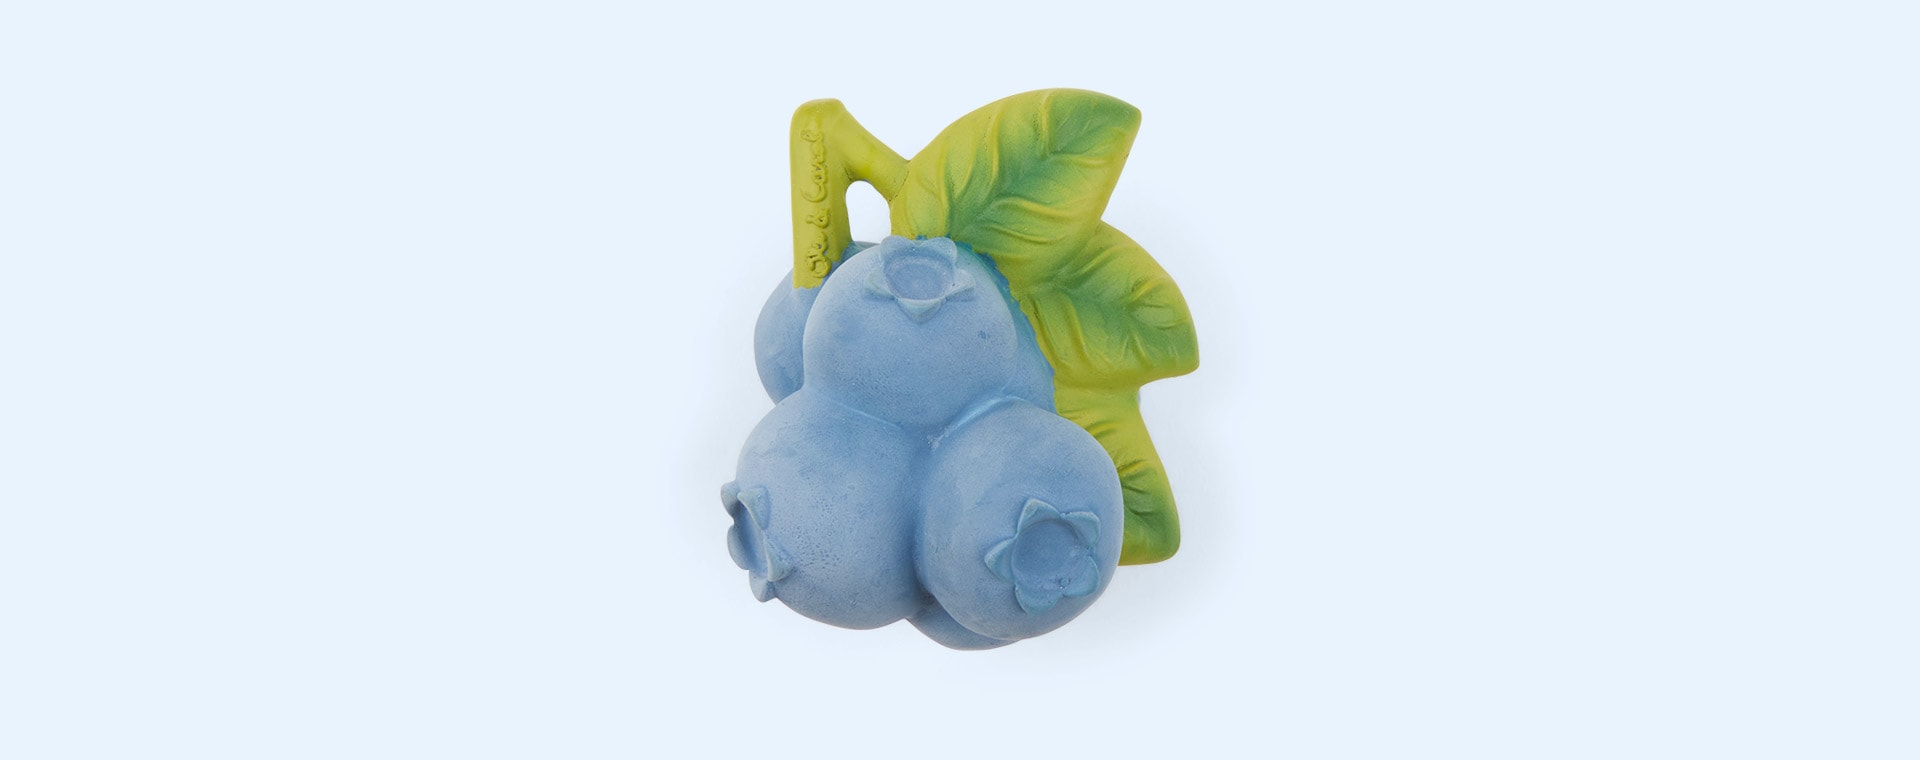 Blue Oli & Carol Jerry the Blueberry Teether & Bath Toy